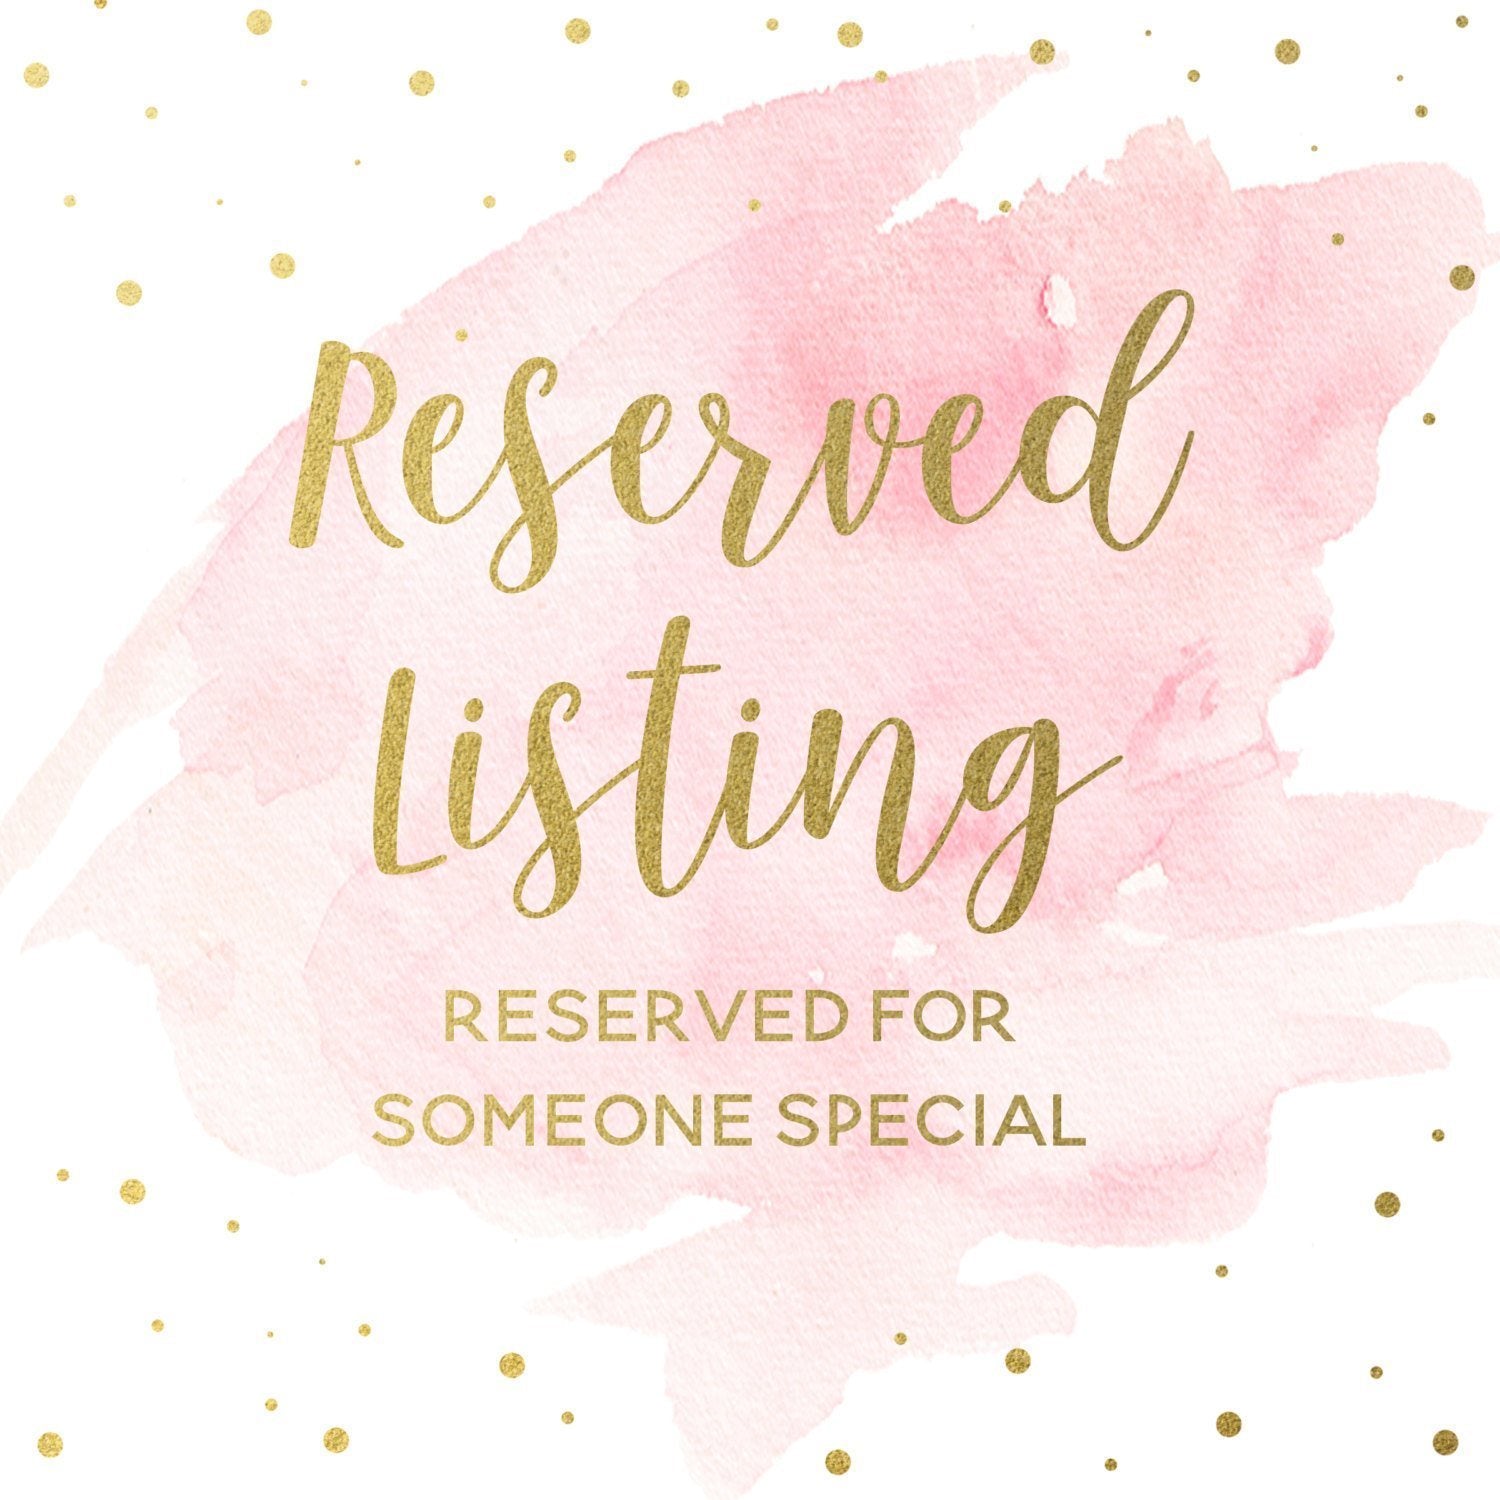 Reserved Listing - K Olson